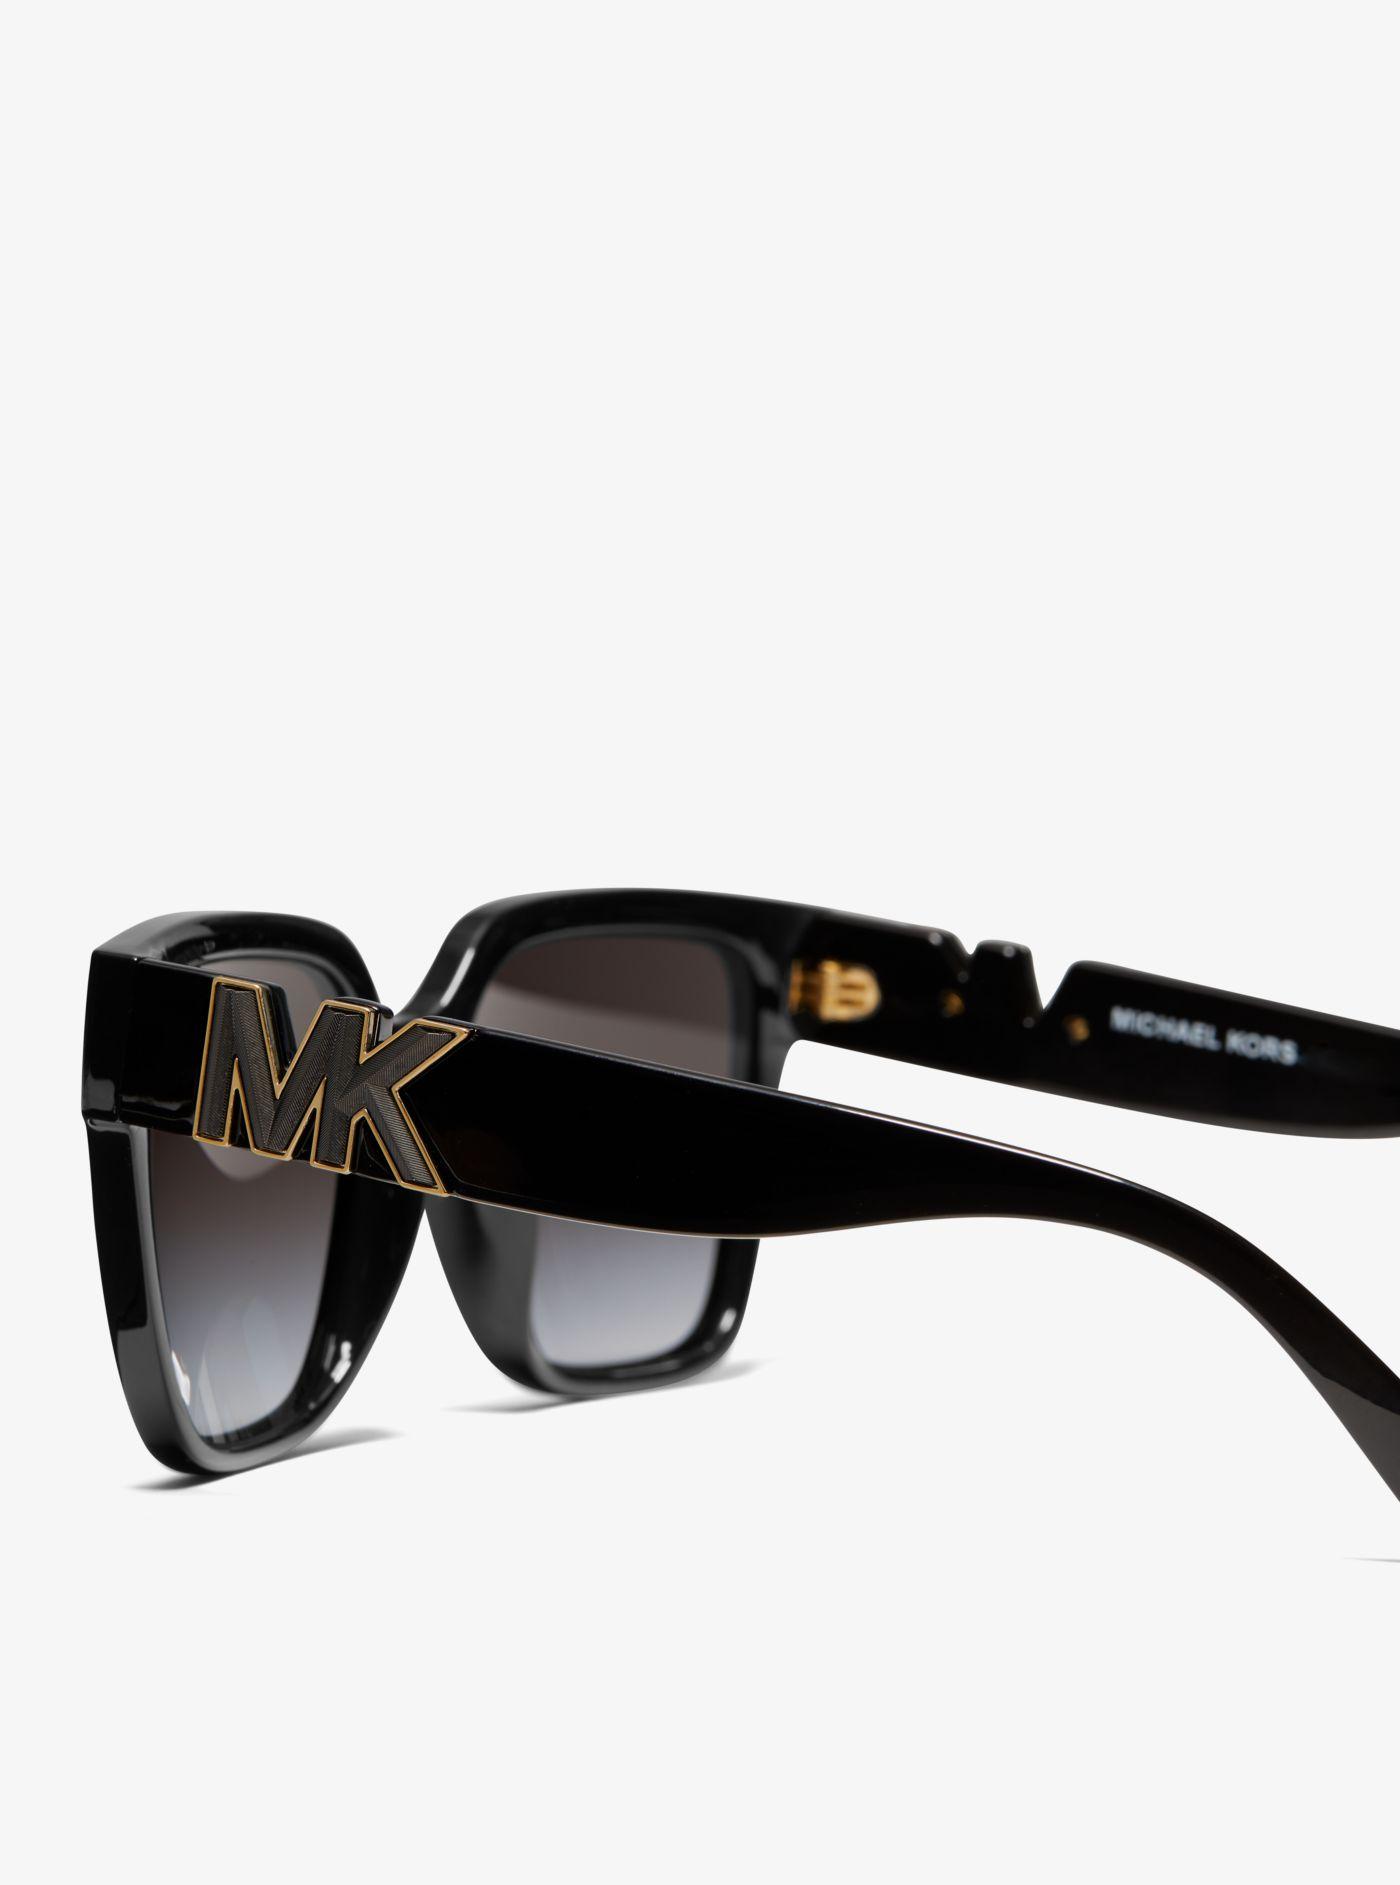 Womens Sunglasses  Designer Sunglasses  Michael Kors